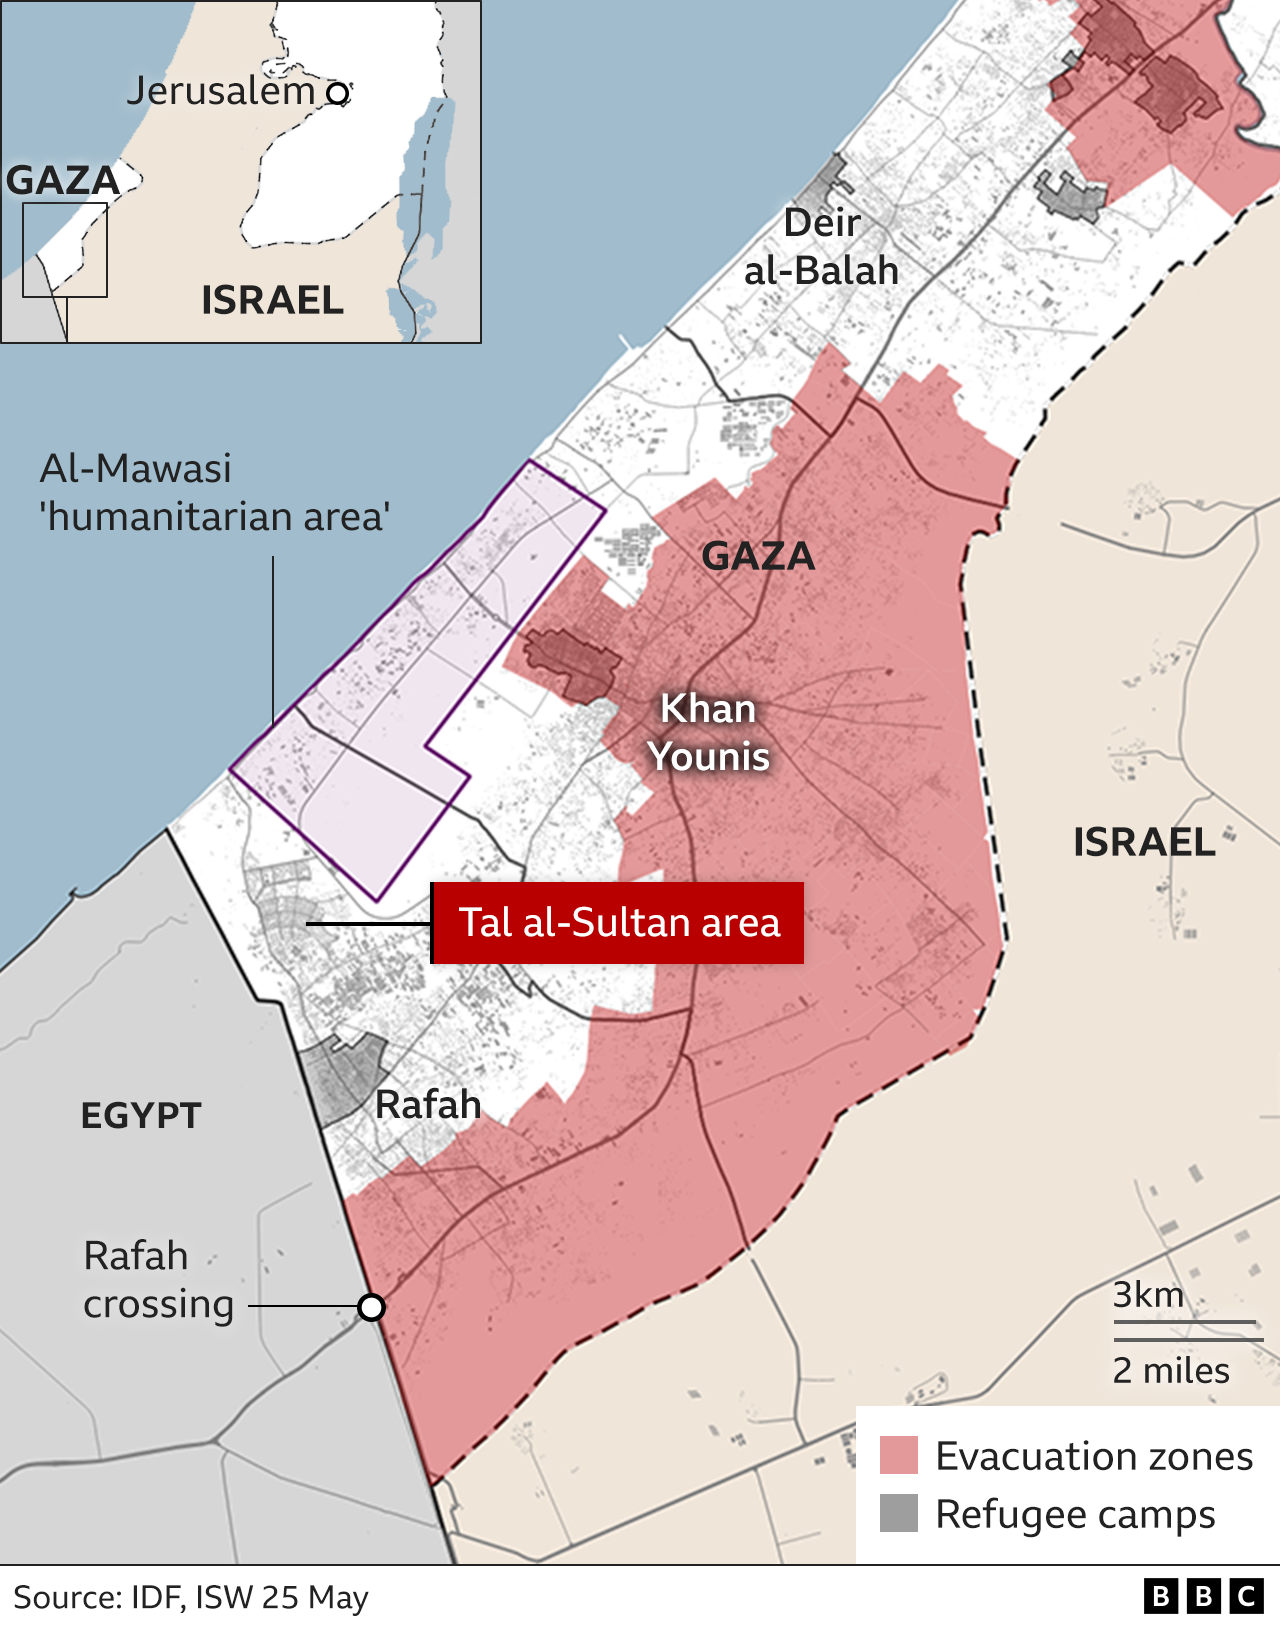 Deadly strike on Rafah a tragic mishap, Netanyahu says